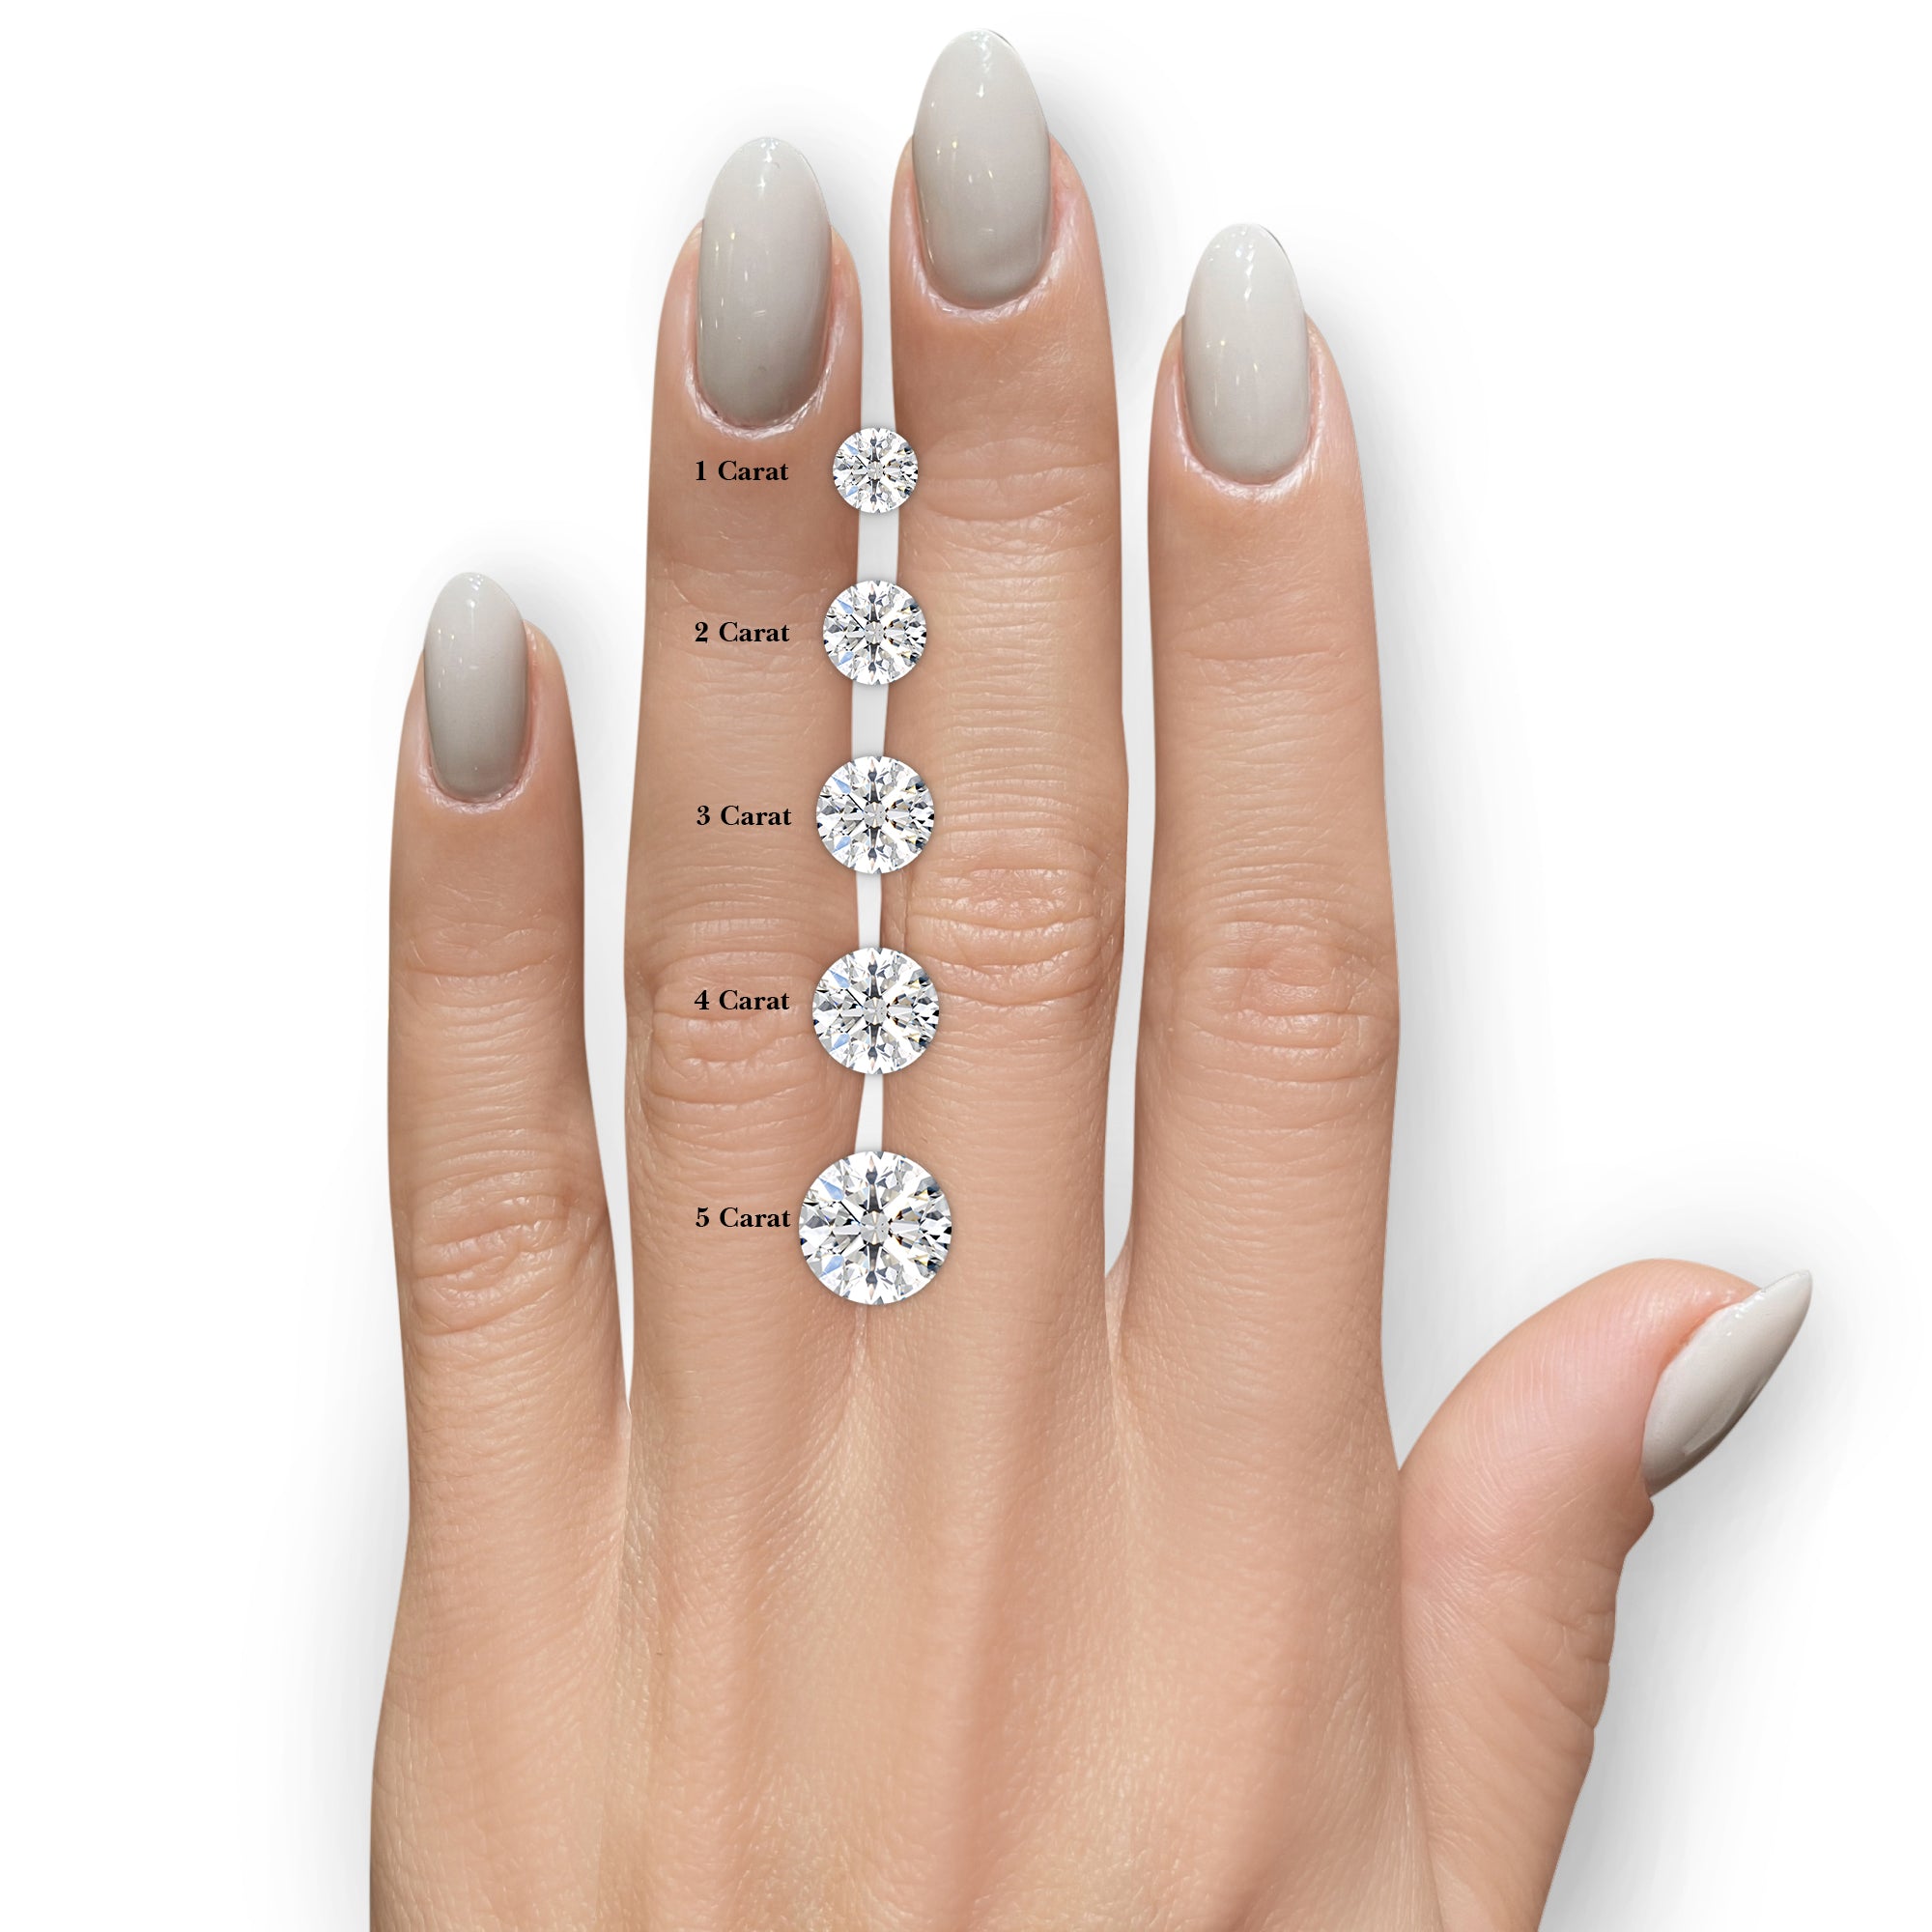 Buy Avsar 18k (750) Yellow Gold and Diamond Ring for Women at Amazon.in